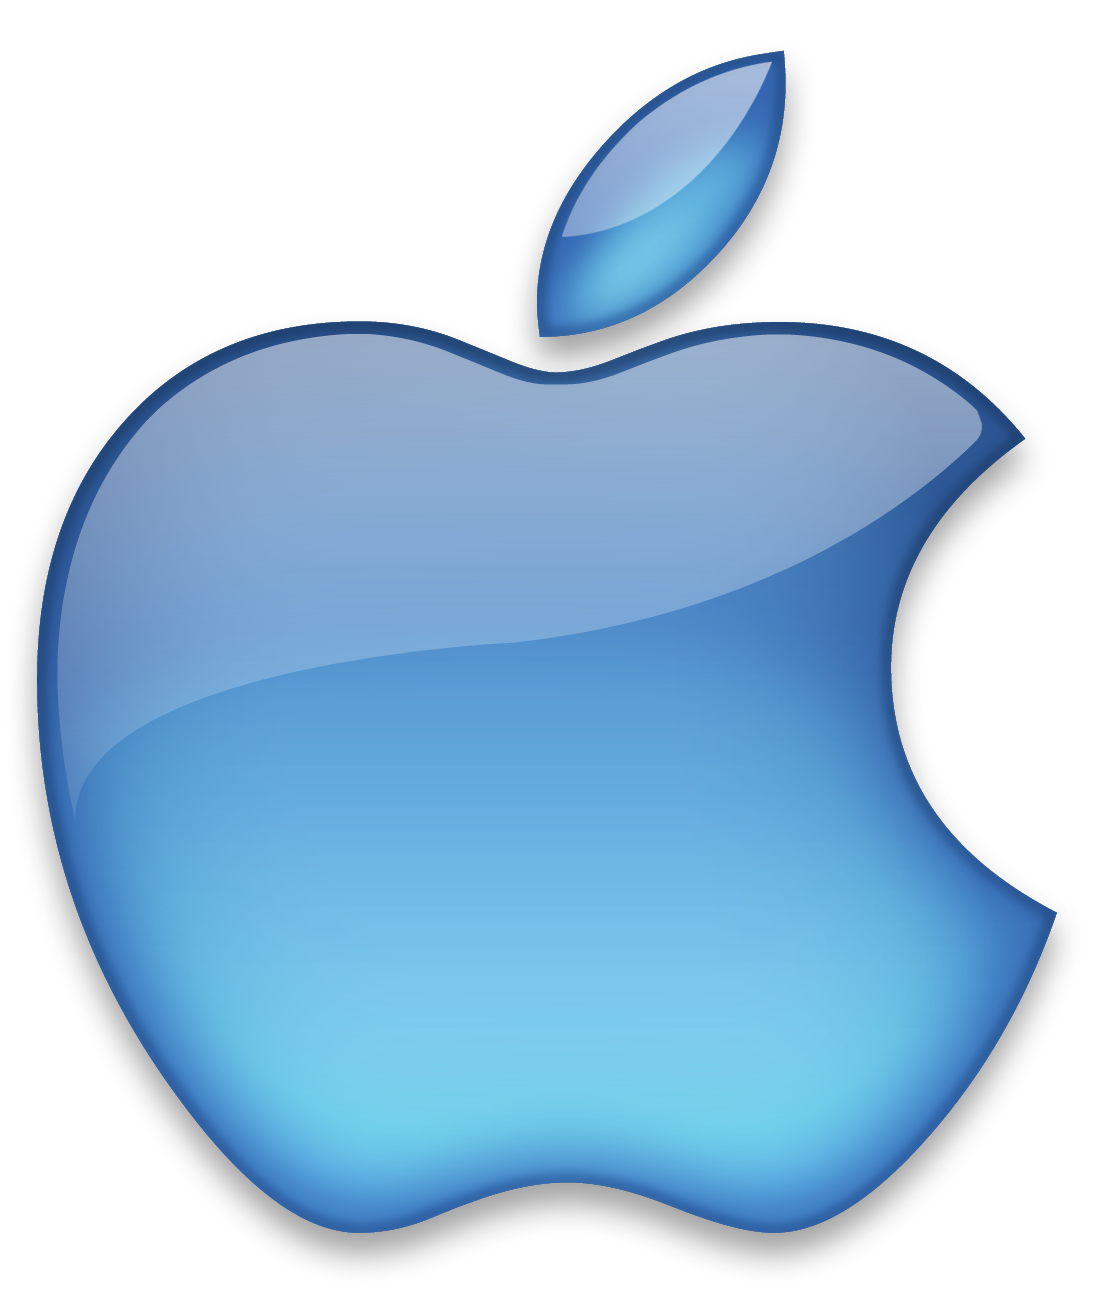 blue-apple-logo-icon-0